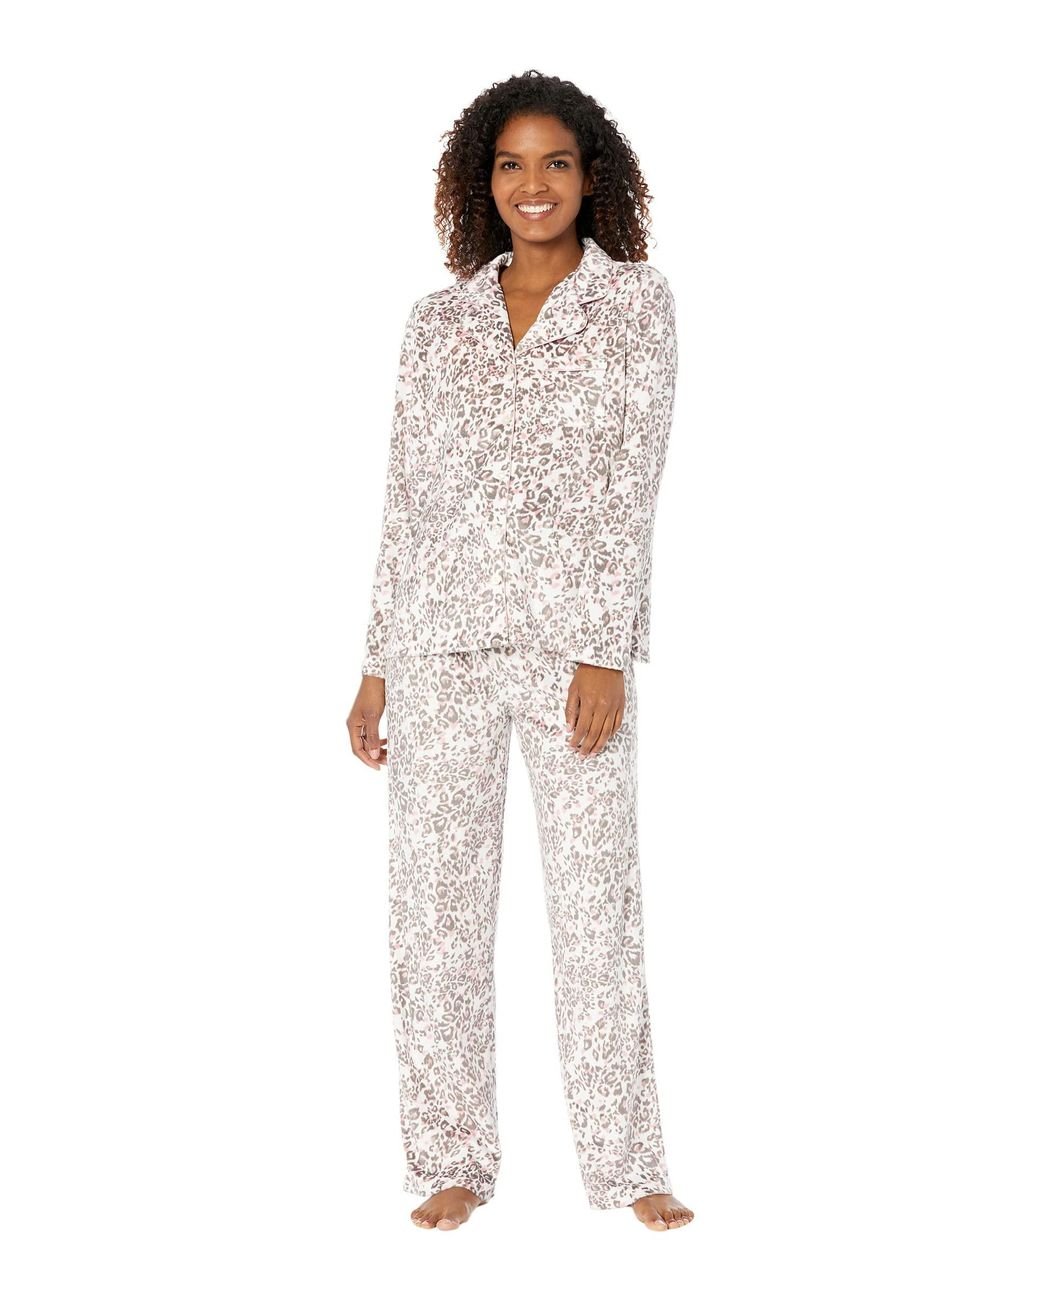 Lacoste Karen Neuburger Womens Long Sleeve Minky Fleece Girlfriend Pj With  Socks Pajama Set in White